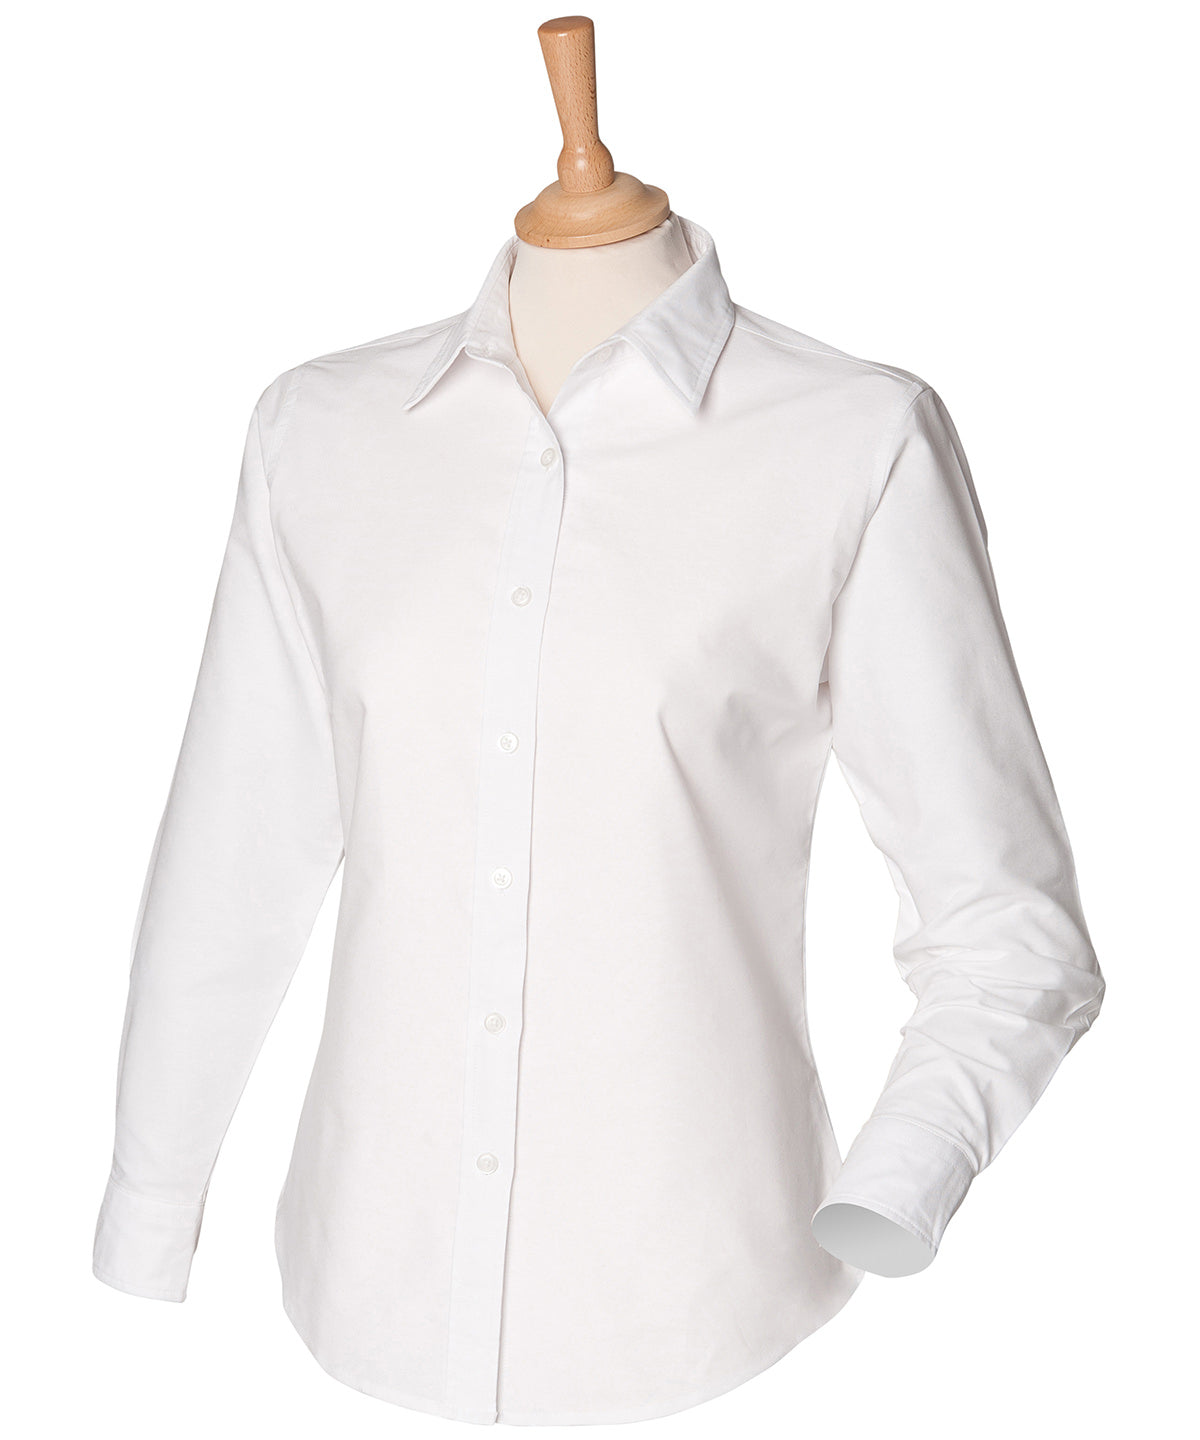 Bolir - Women's Classic Long Sleeve Oxford Shirt